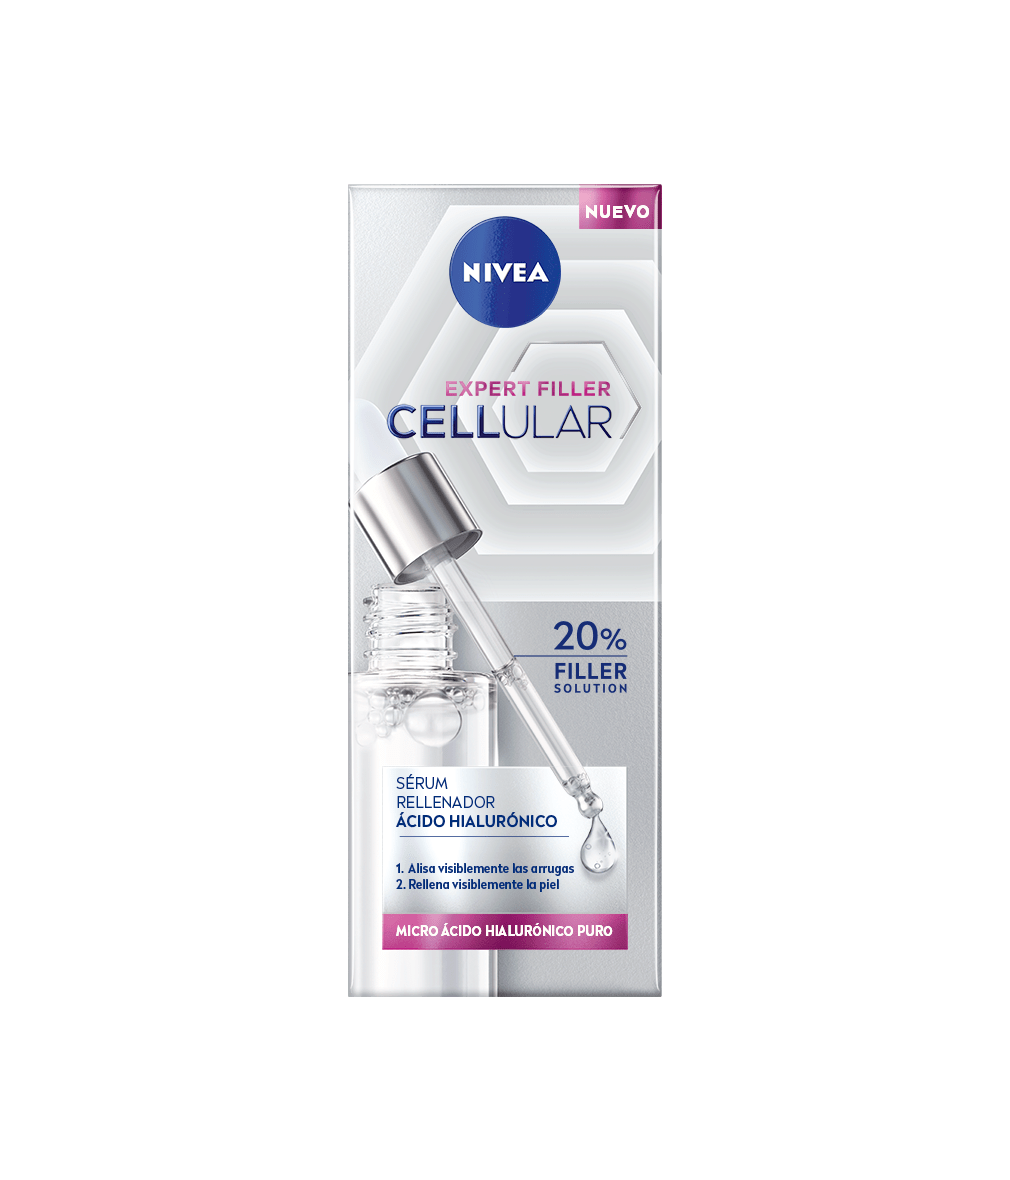 NIVEA Cellular Expert Filler Serum Rellenador